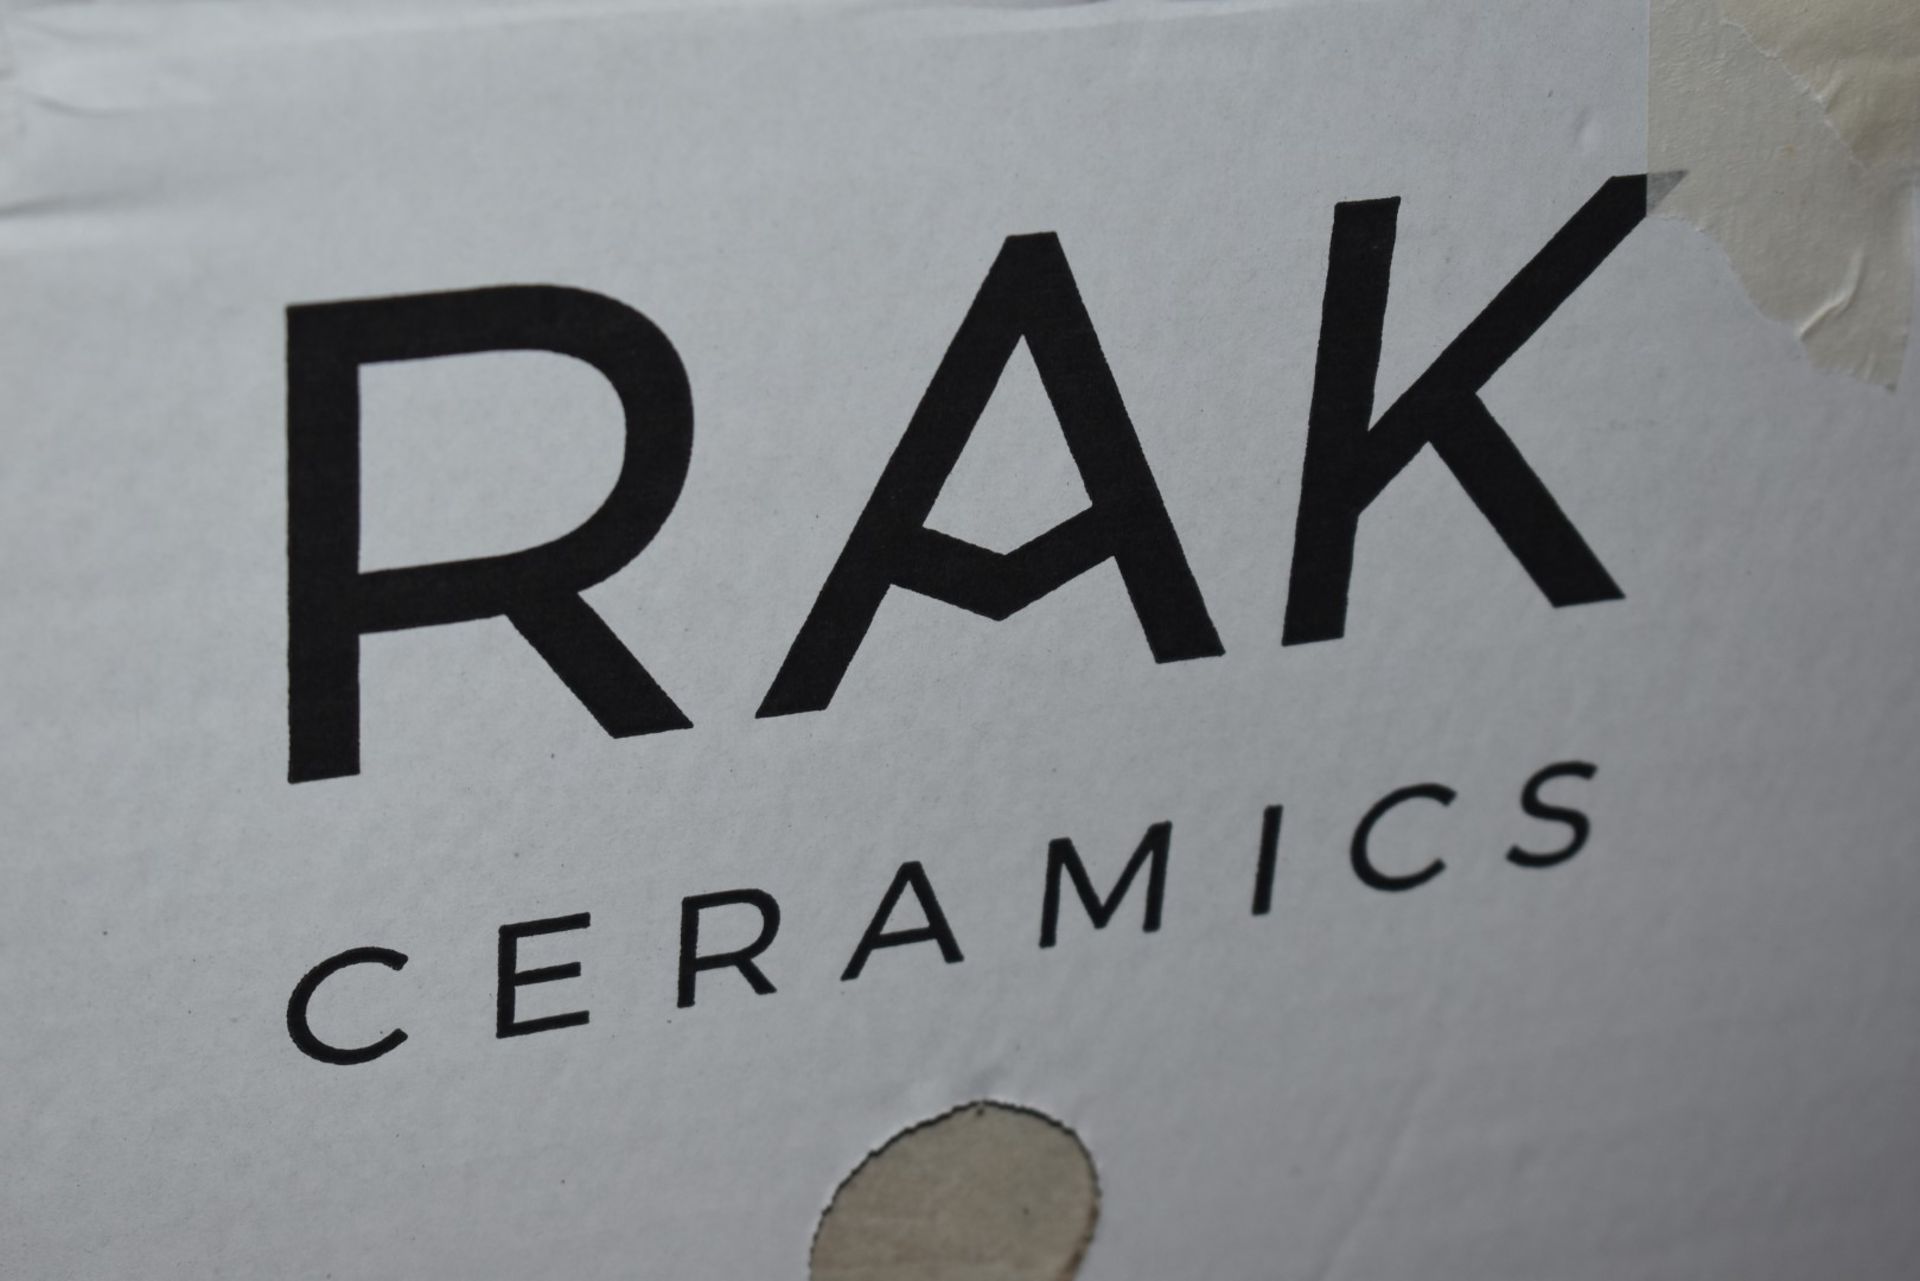 10 x Boxes of RAK Porcelain Floor or Wall Tiles - Capital Wood in Natural Oak - 29.5 x 120 cm - Image 2 of 3